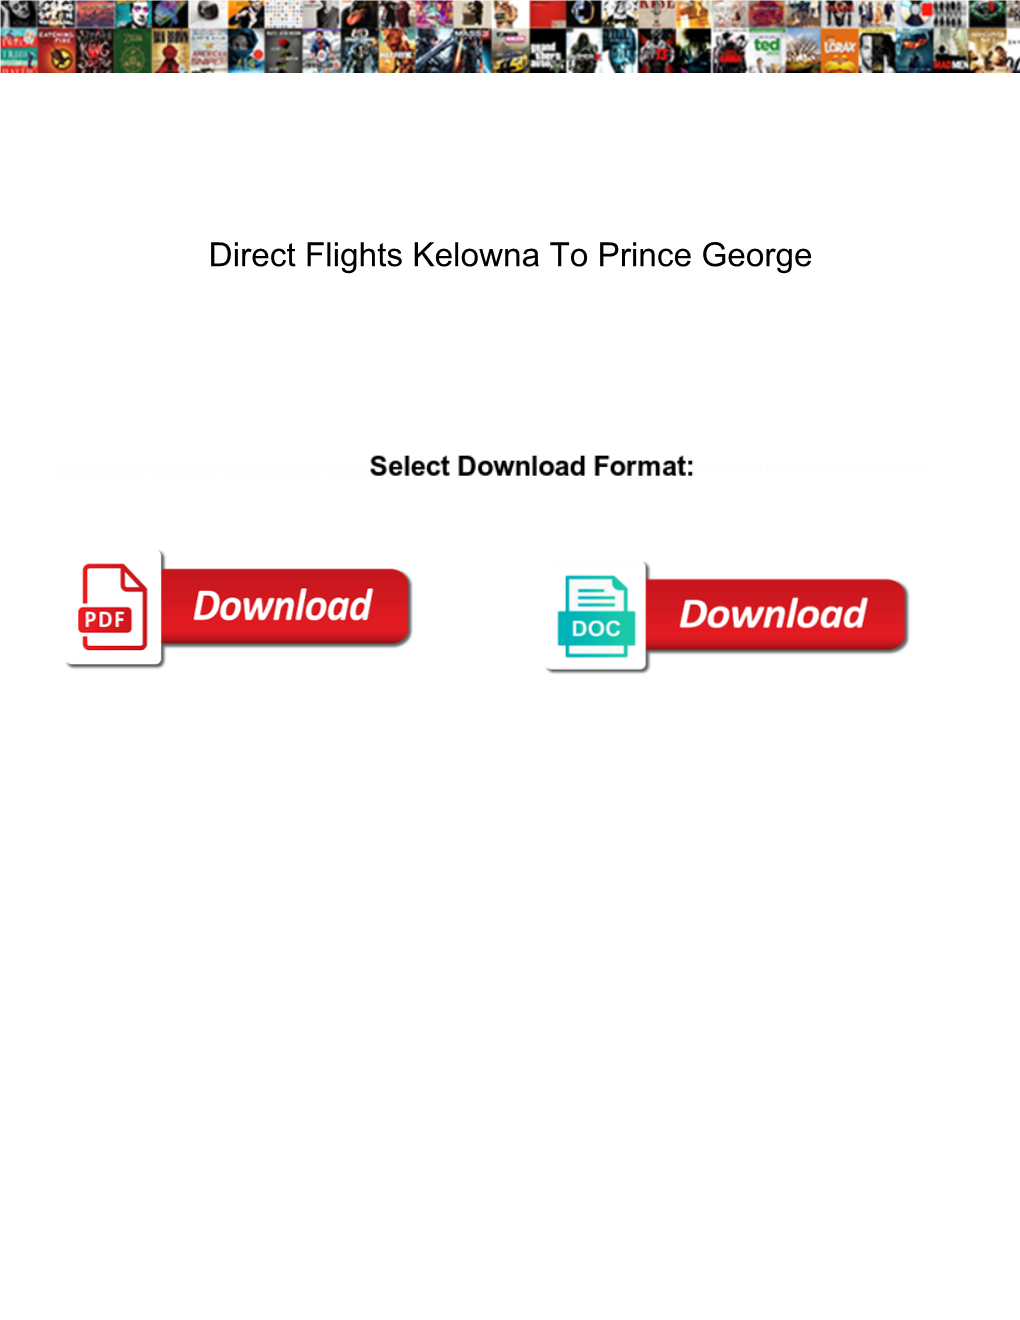 Direct Flights Kelowna to Prince George Pentoo